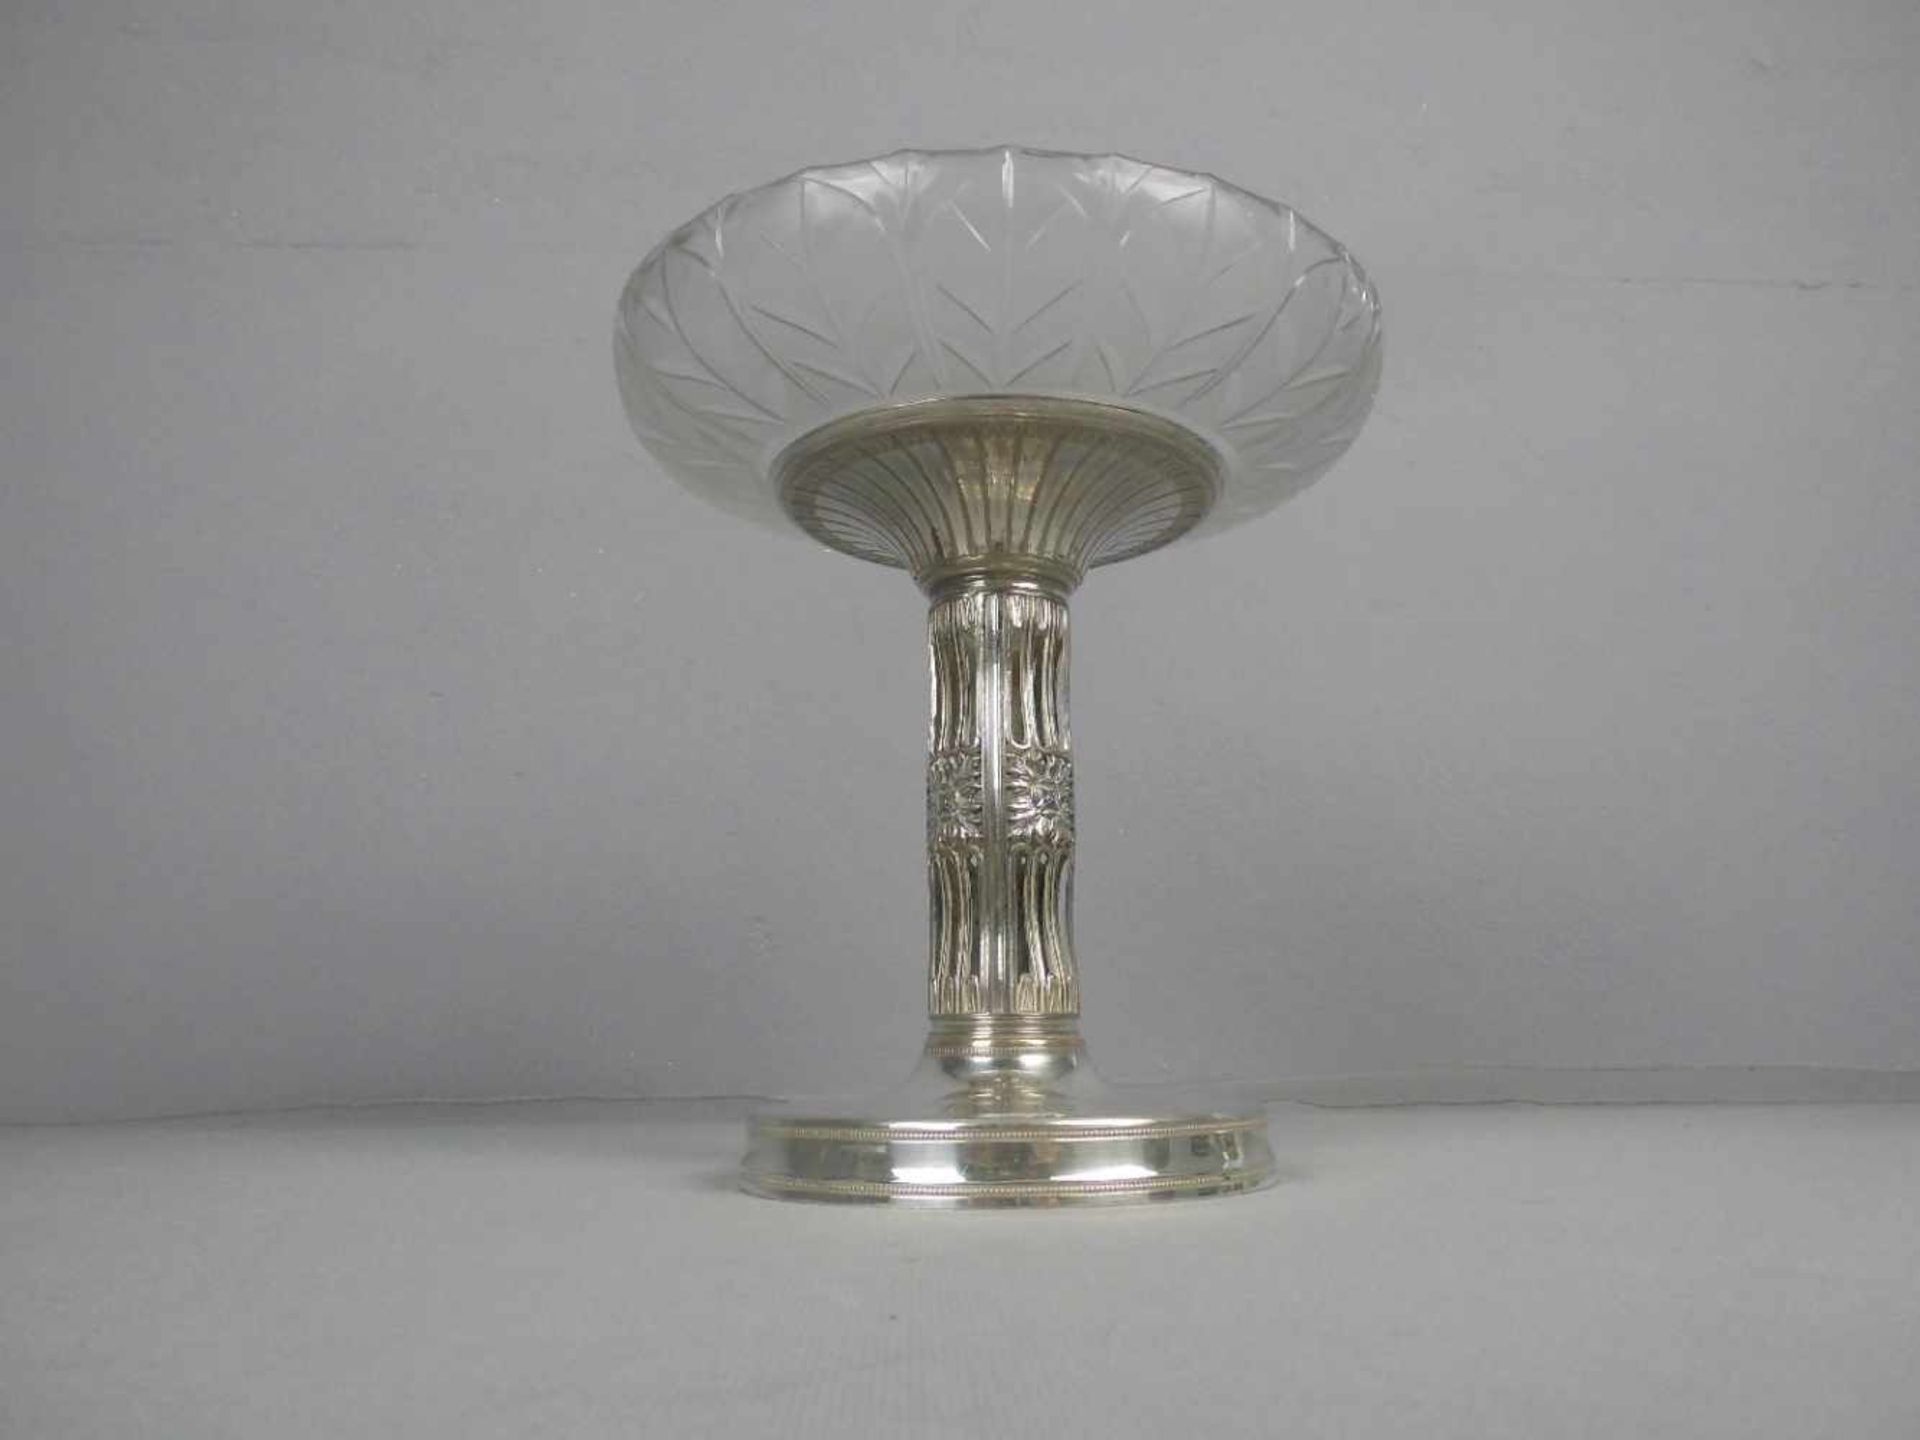 JUGENDSTIL - FUSSSCHALE / TAFELAUFSATZ / bowl on a stand / Art nouveau centerpiece, zweiteilig, - Bild 3 aus 3